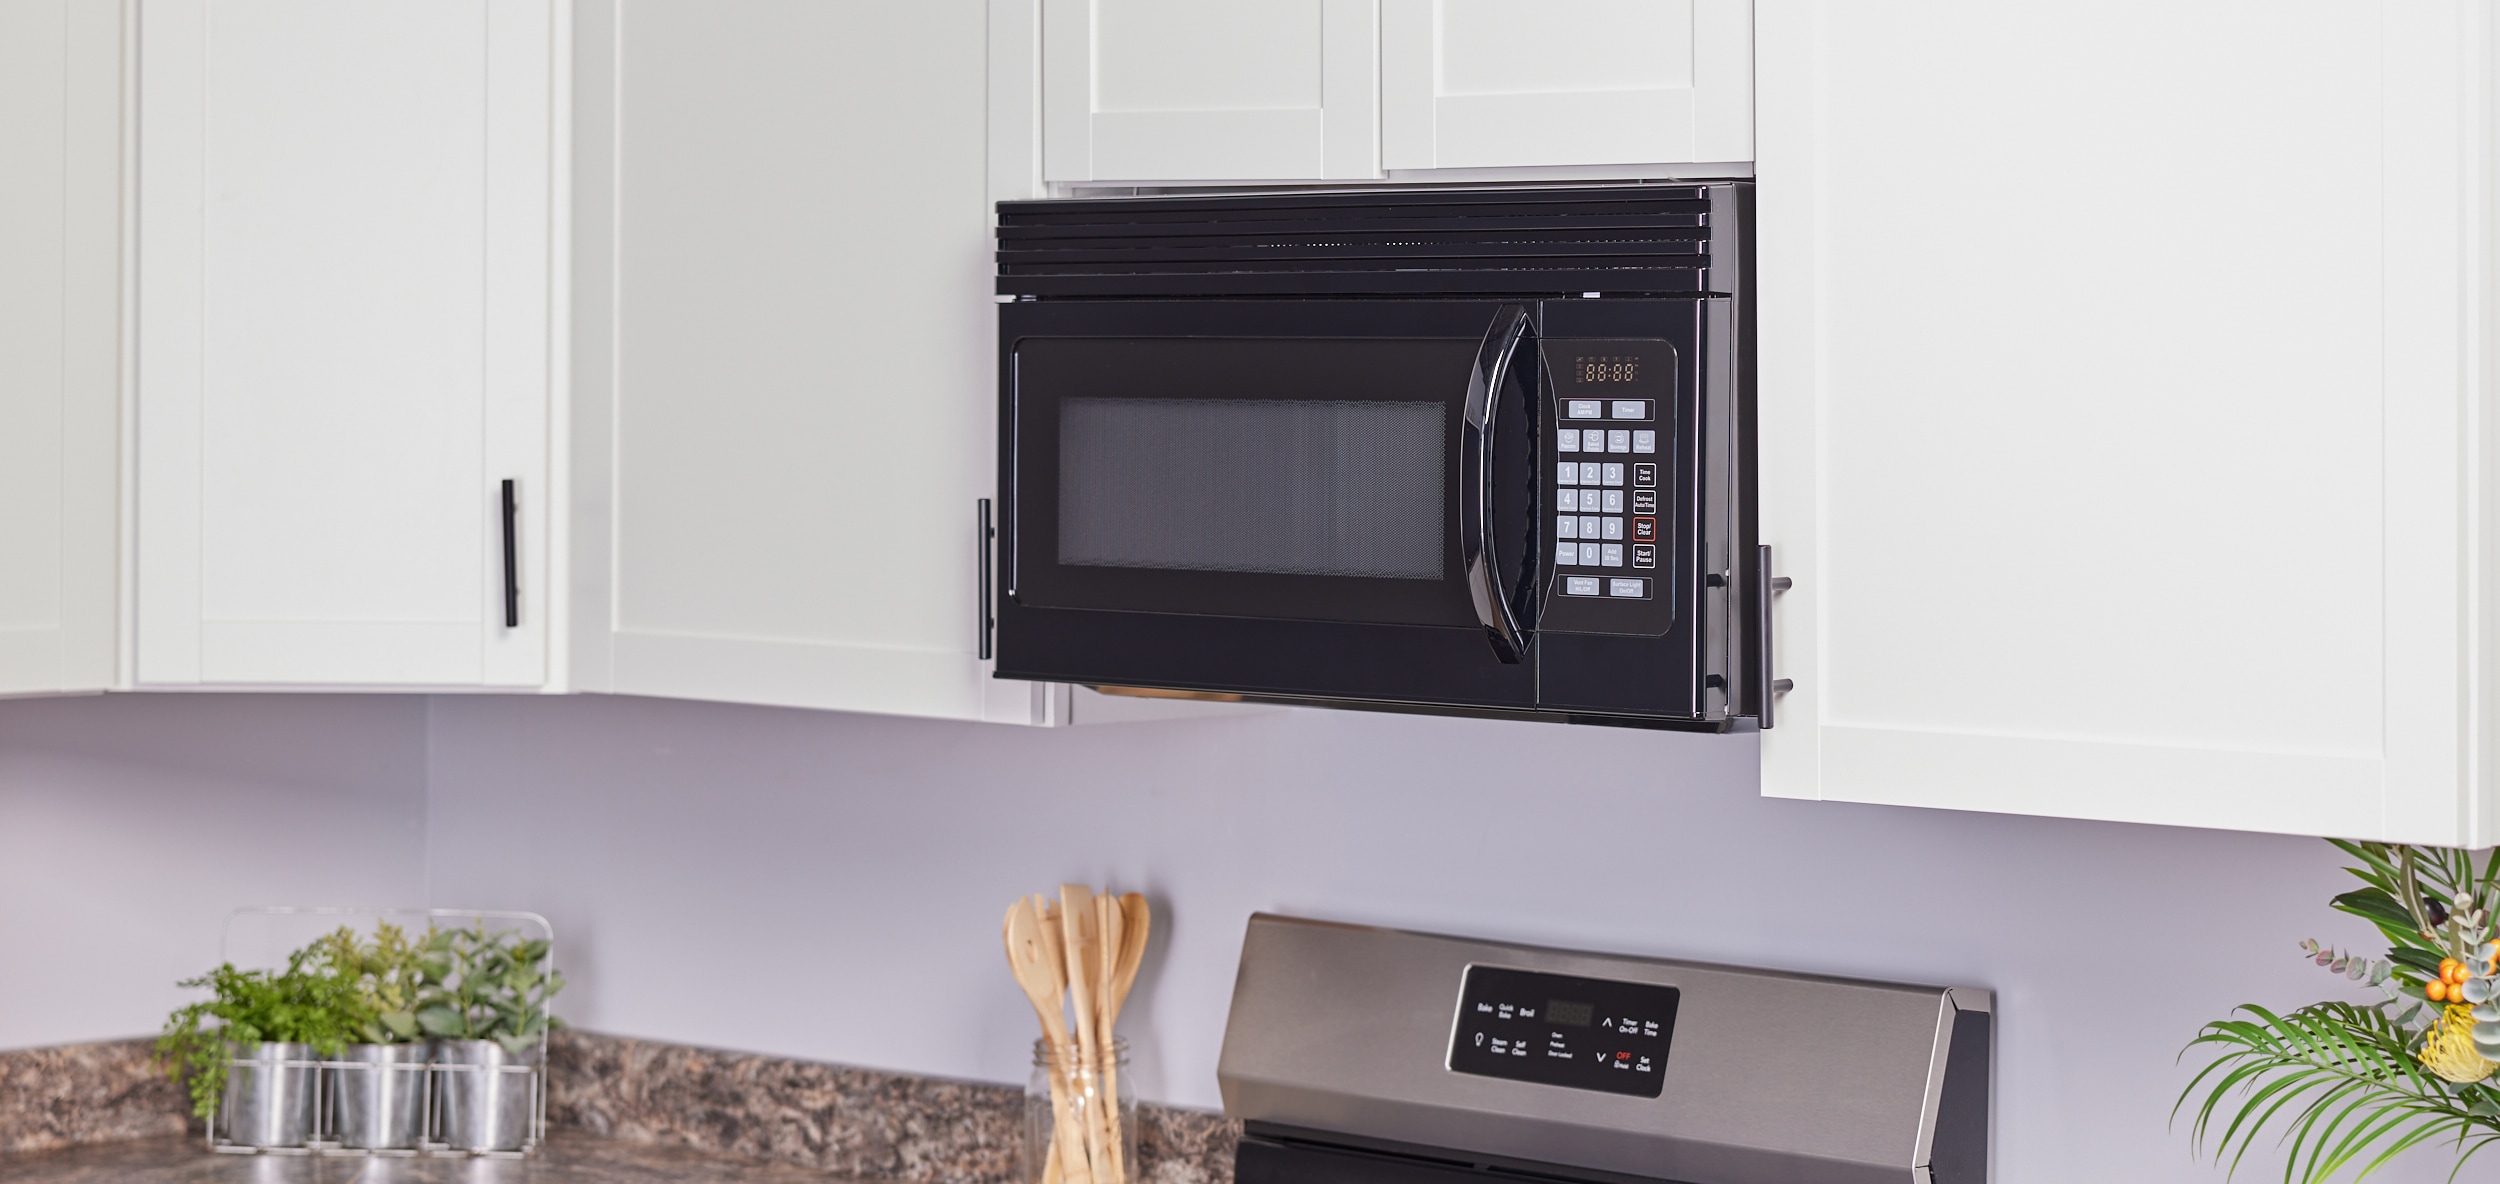 Black+decker 1000 Watt 1.1 Cubic Feet Countertop Table Microwave Oven, White